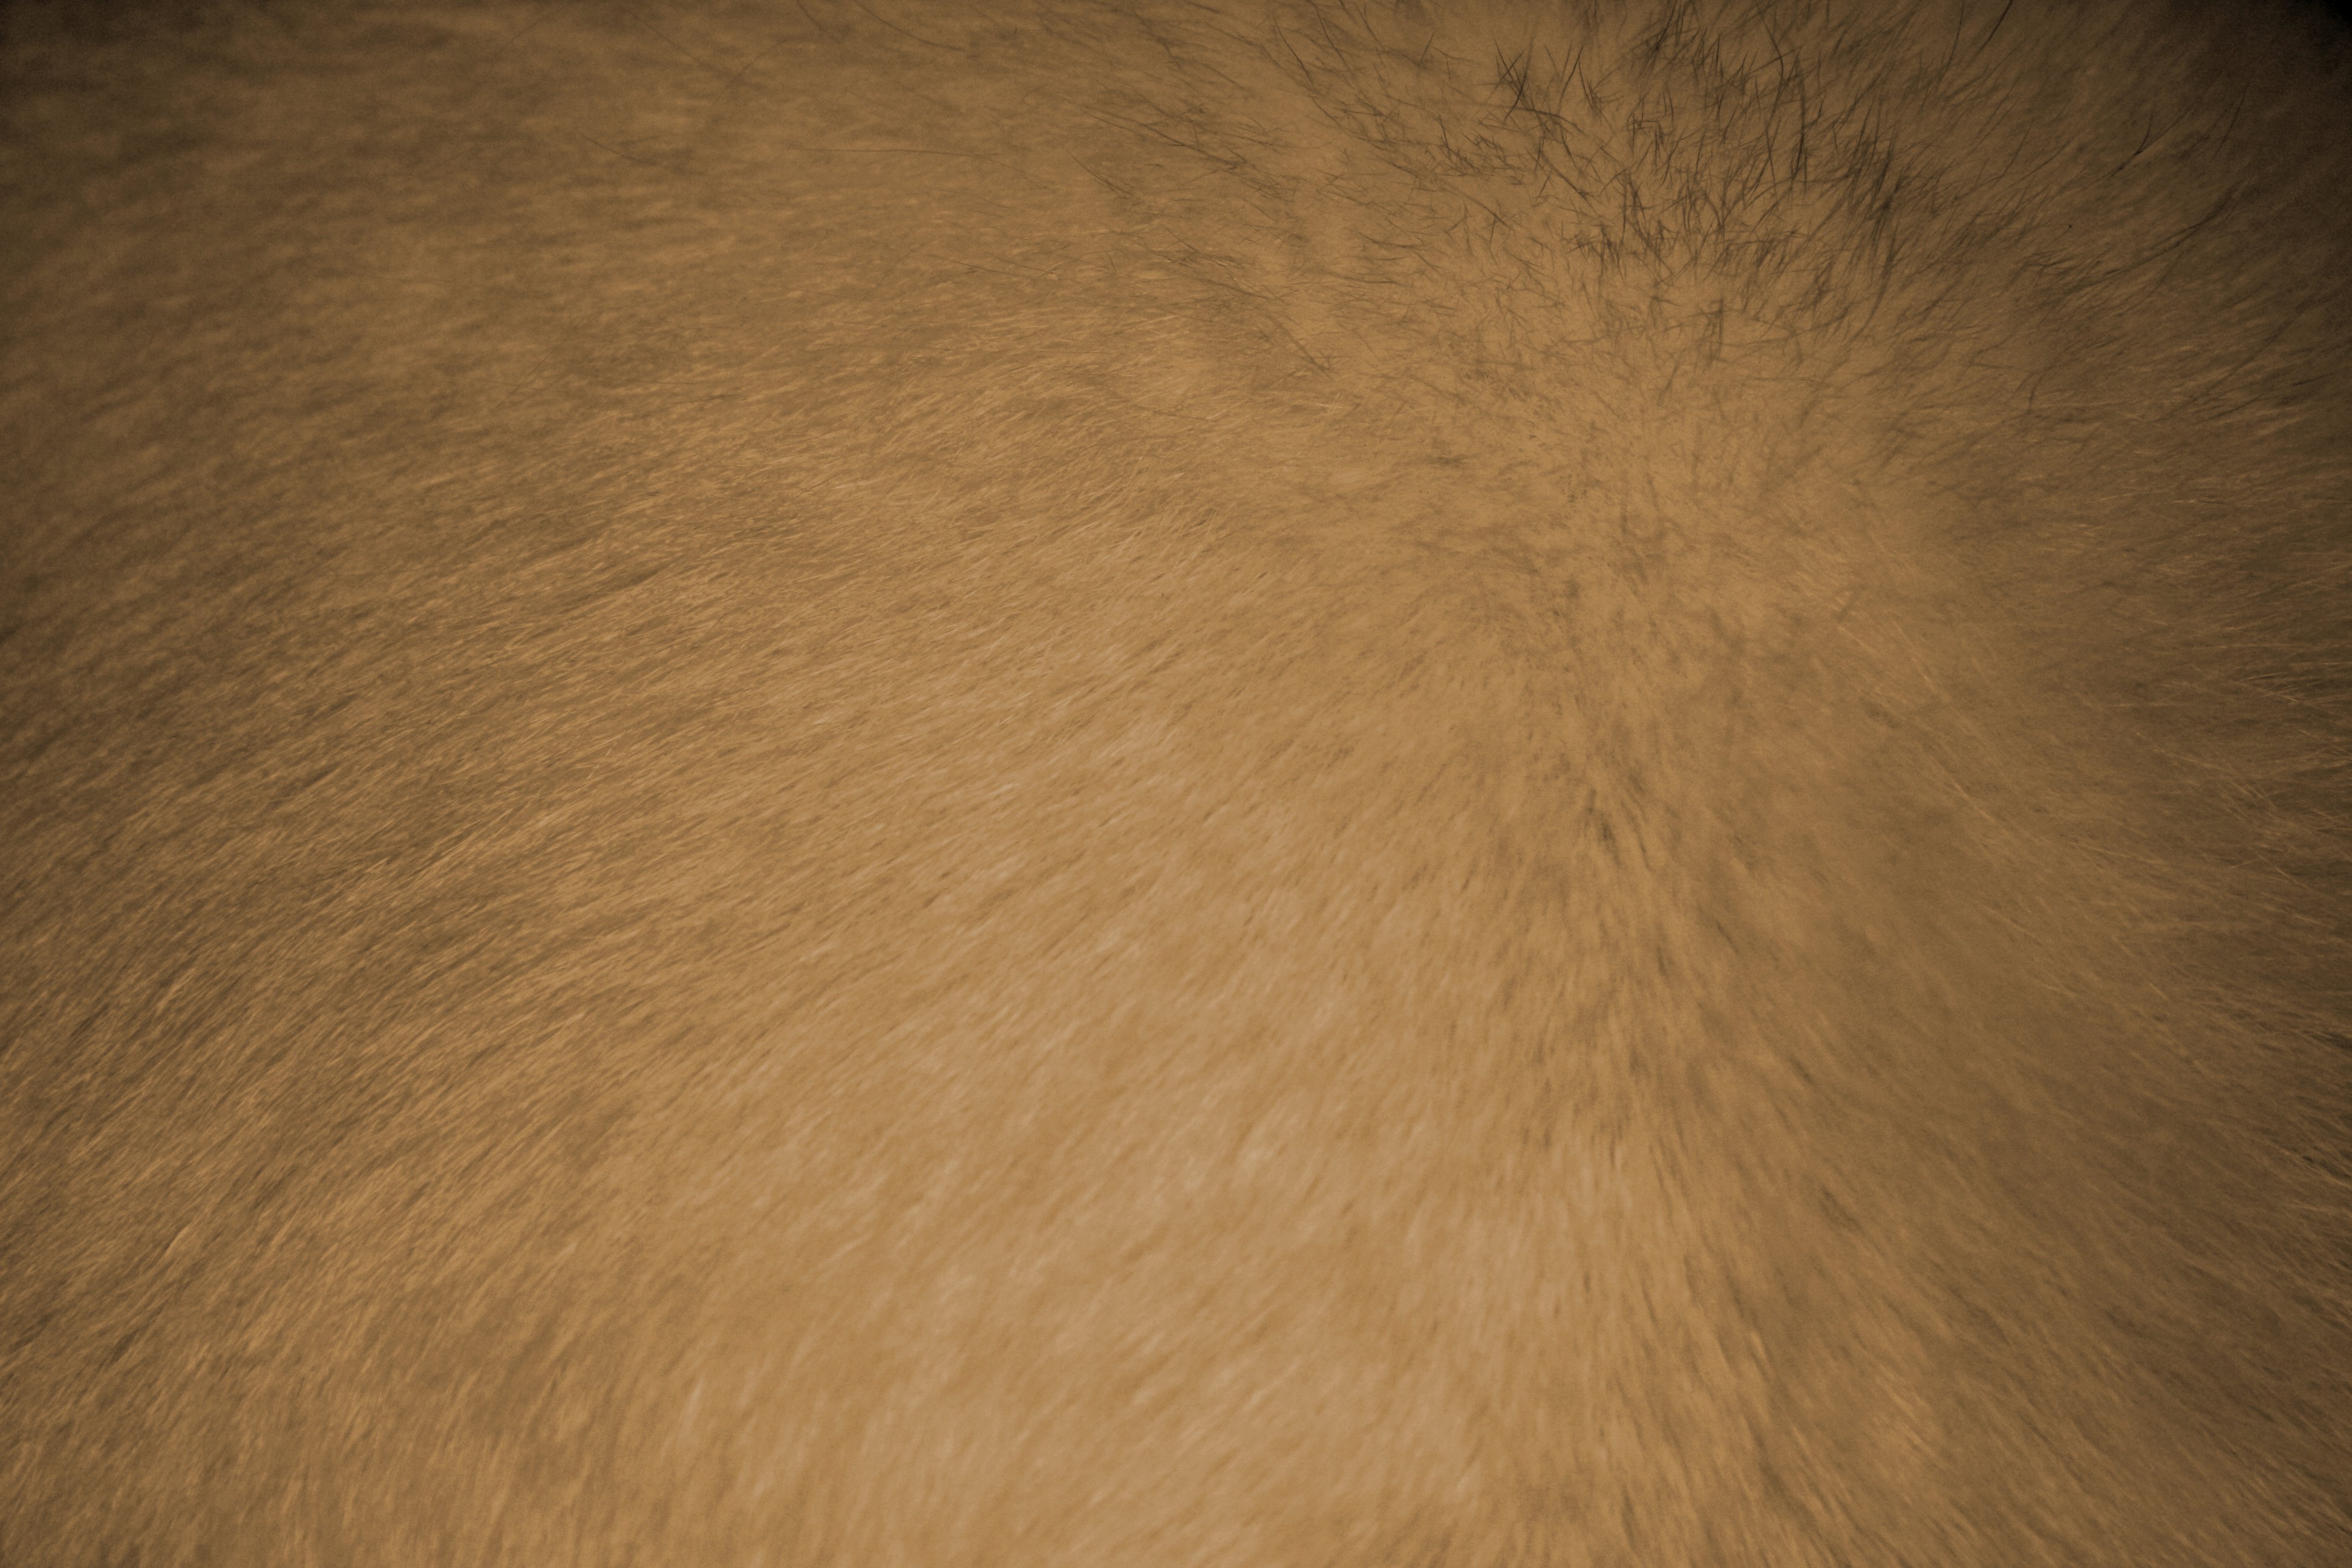 Tan or Light Brown Fur Texture | Free Photograph | Photos Public Domain